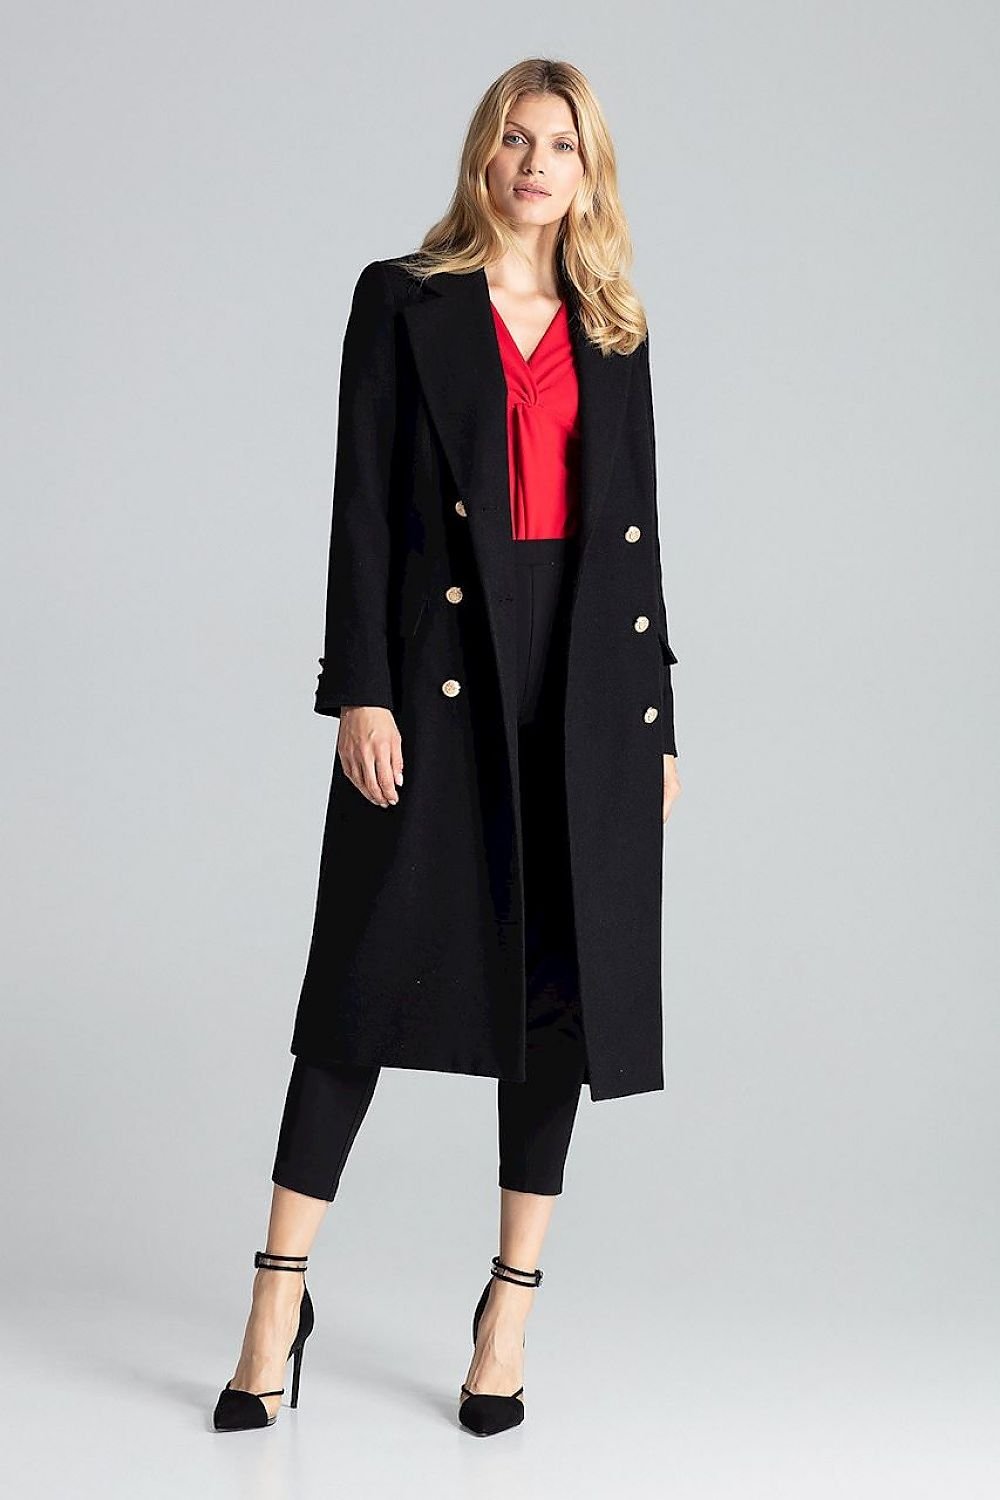 Fashionista Collar Black Coat